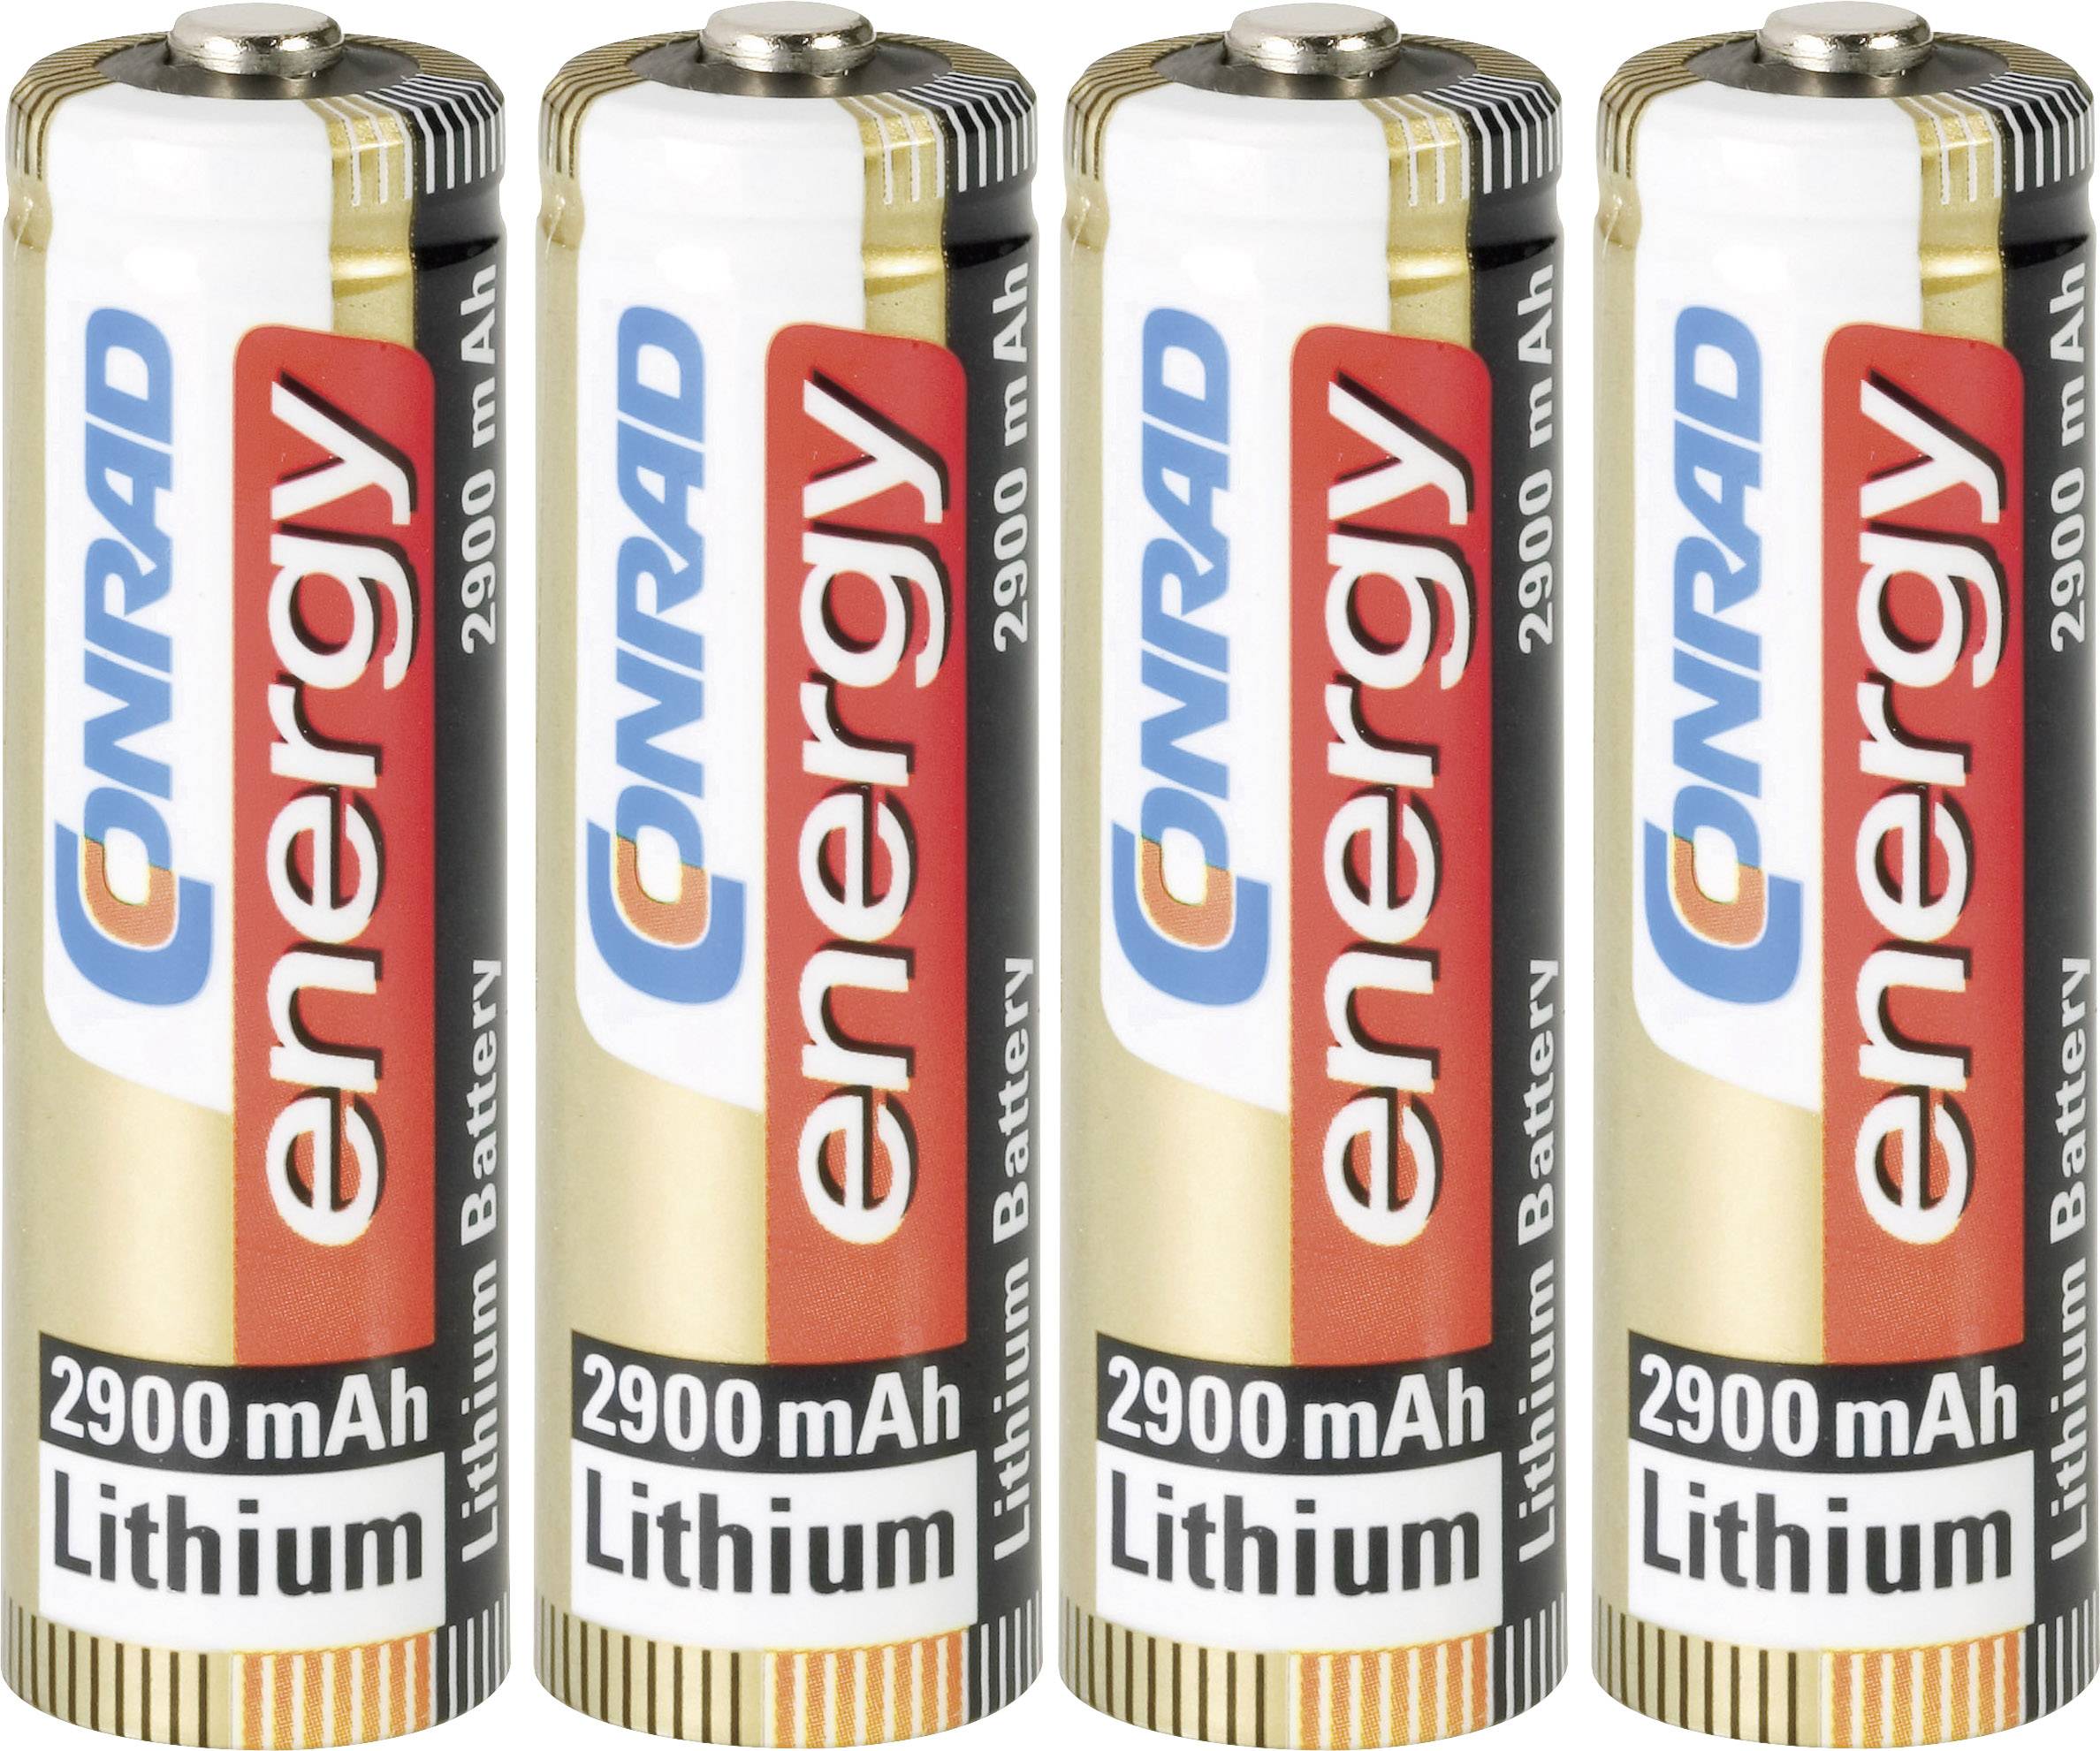 hohe Kapazität 1,5V ANSMANN Extreme Lithium Batterie AA Mignon 4er Pack 700% mehr Power LR6 extrem leich